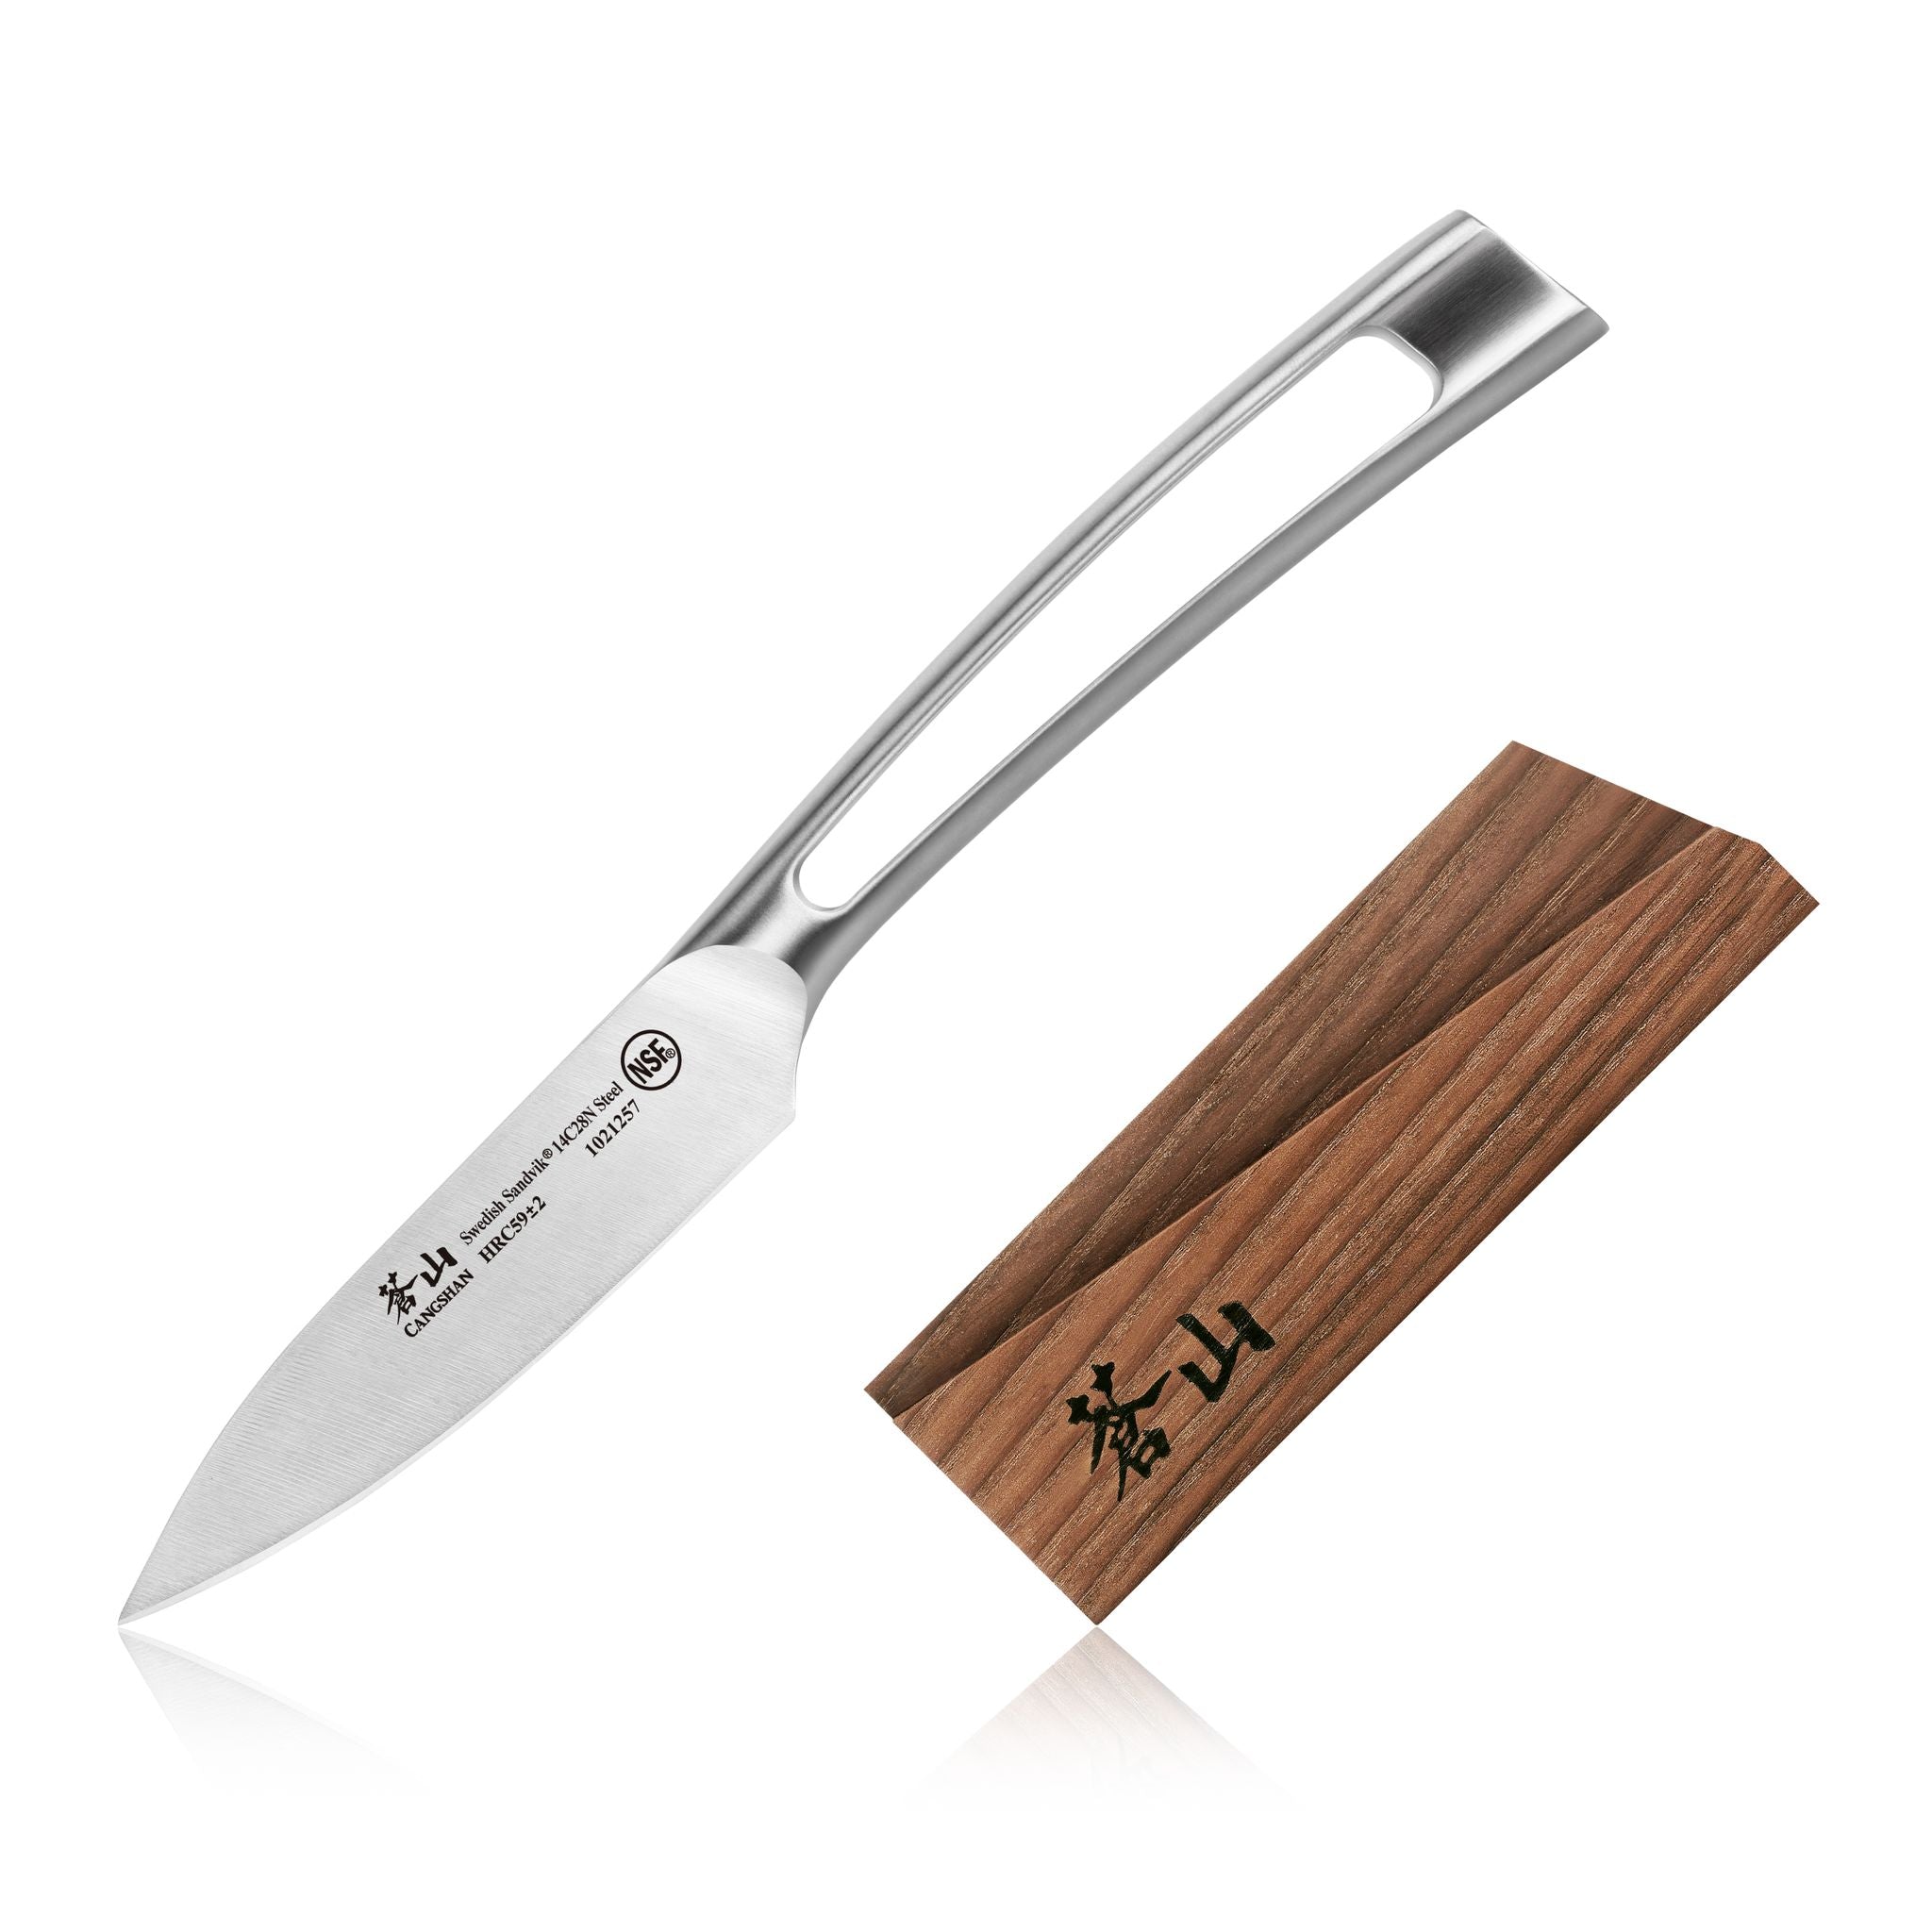 Cutlery Swedish 14C2 Cangshan Forged 3.5-Inch – Knife TN1 Sheath, Paring Series Wood with Company